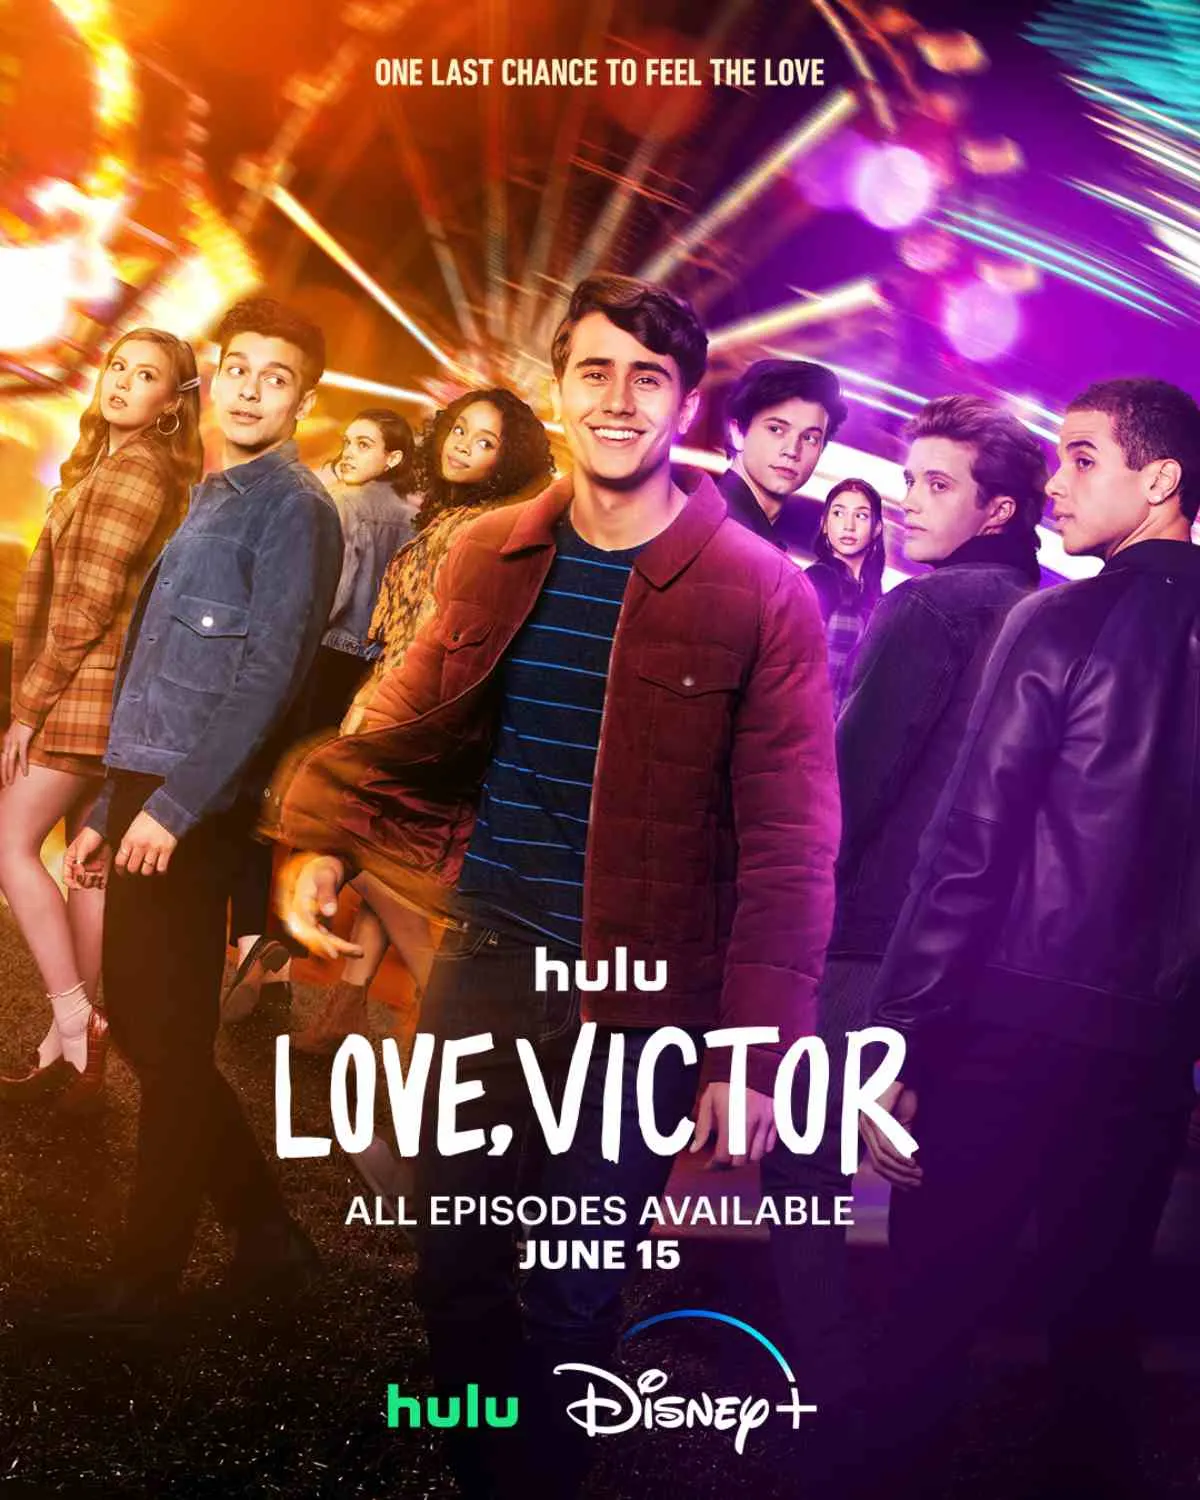 Love, Victor Season 3 Trailer and Key Art!